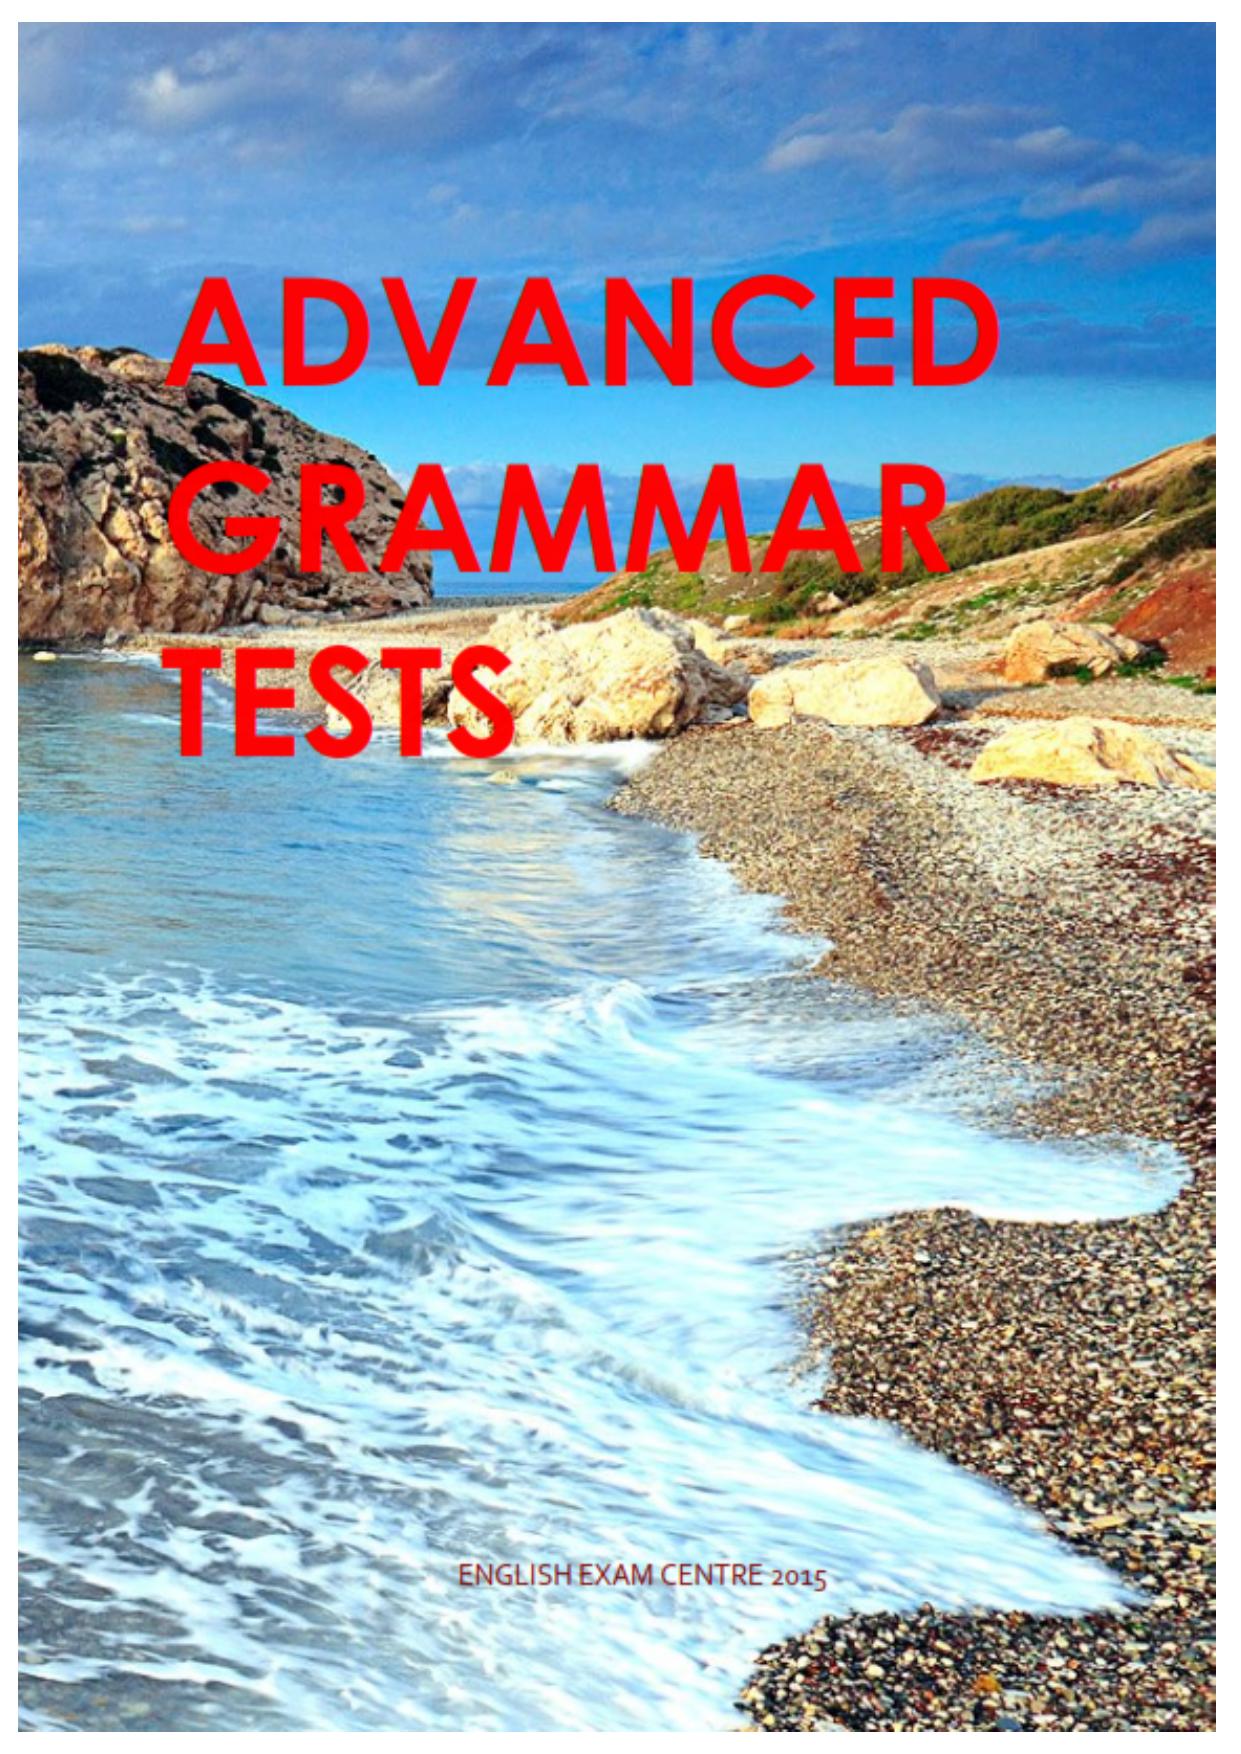 Advance Grammar Tests